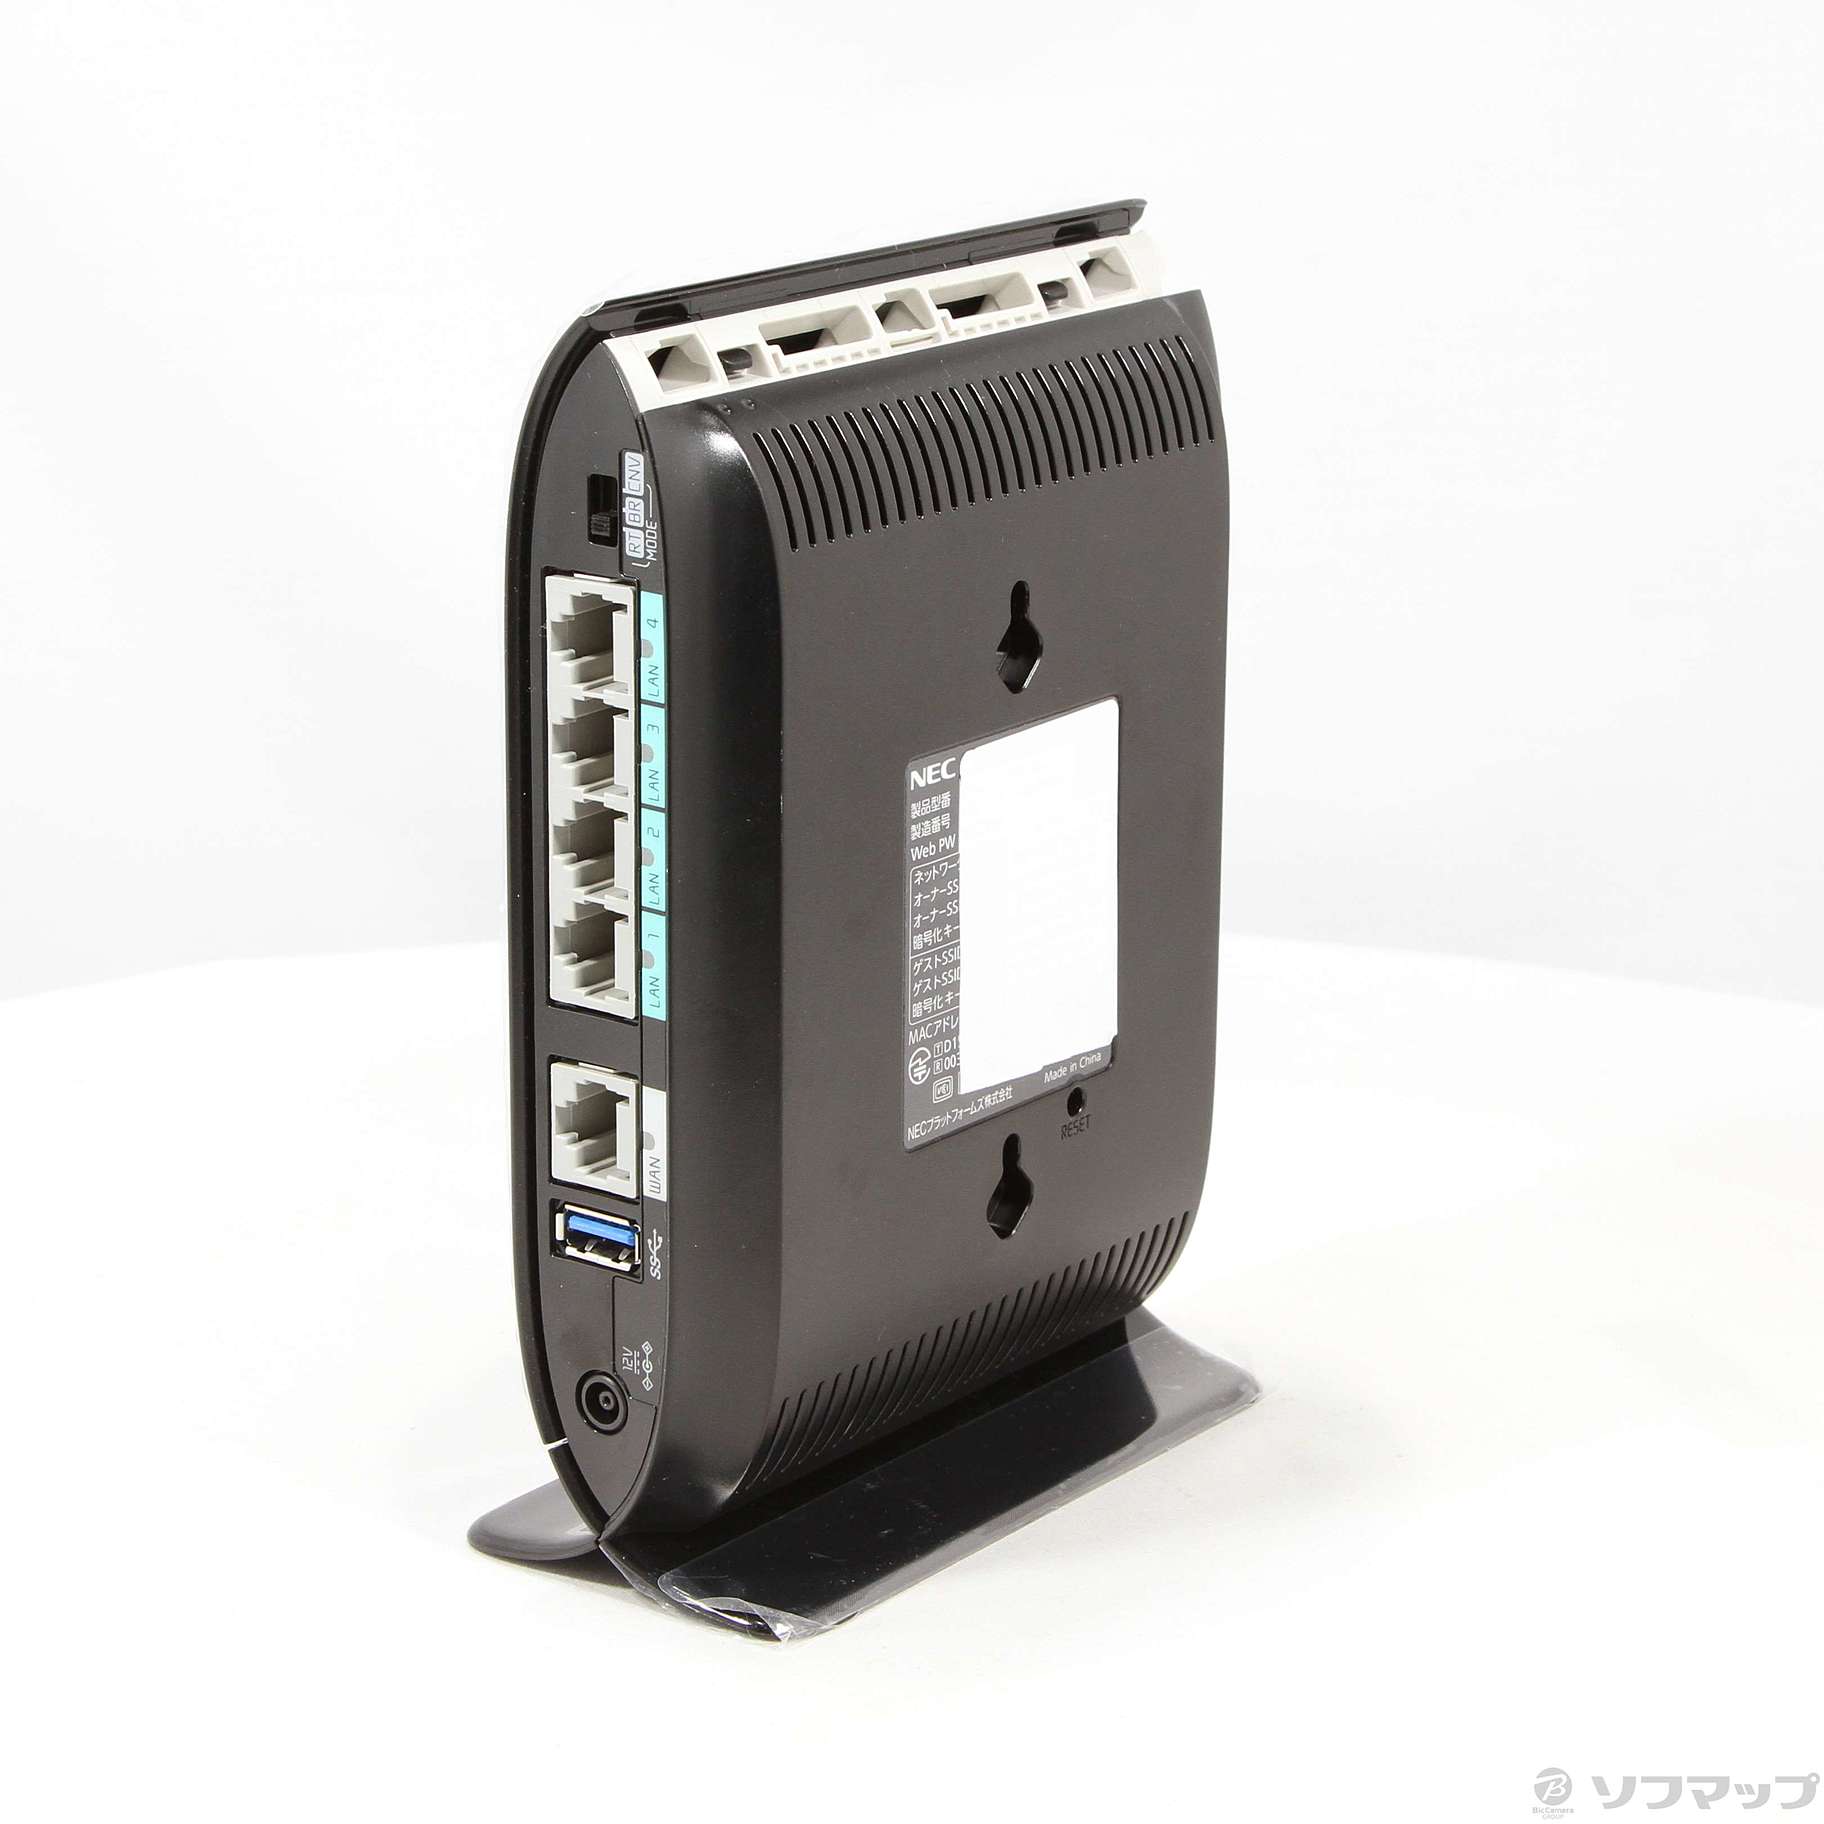 WiFiルーターAterm WG2600HP2 PA-WG2600HP2 - PC周辺機器